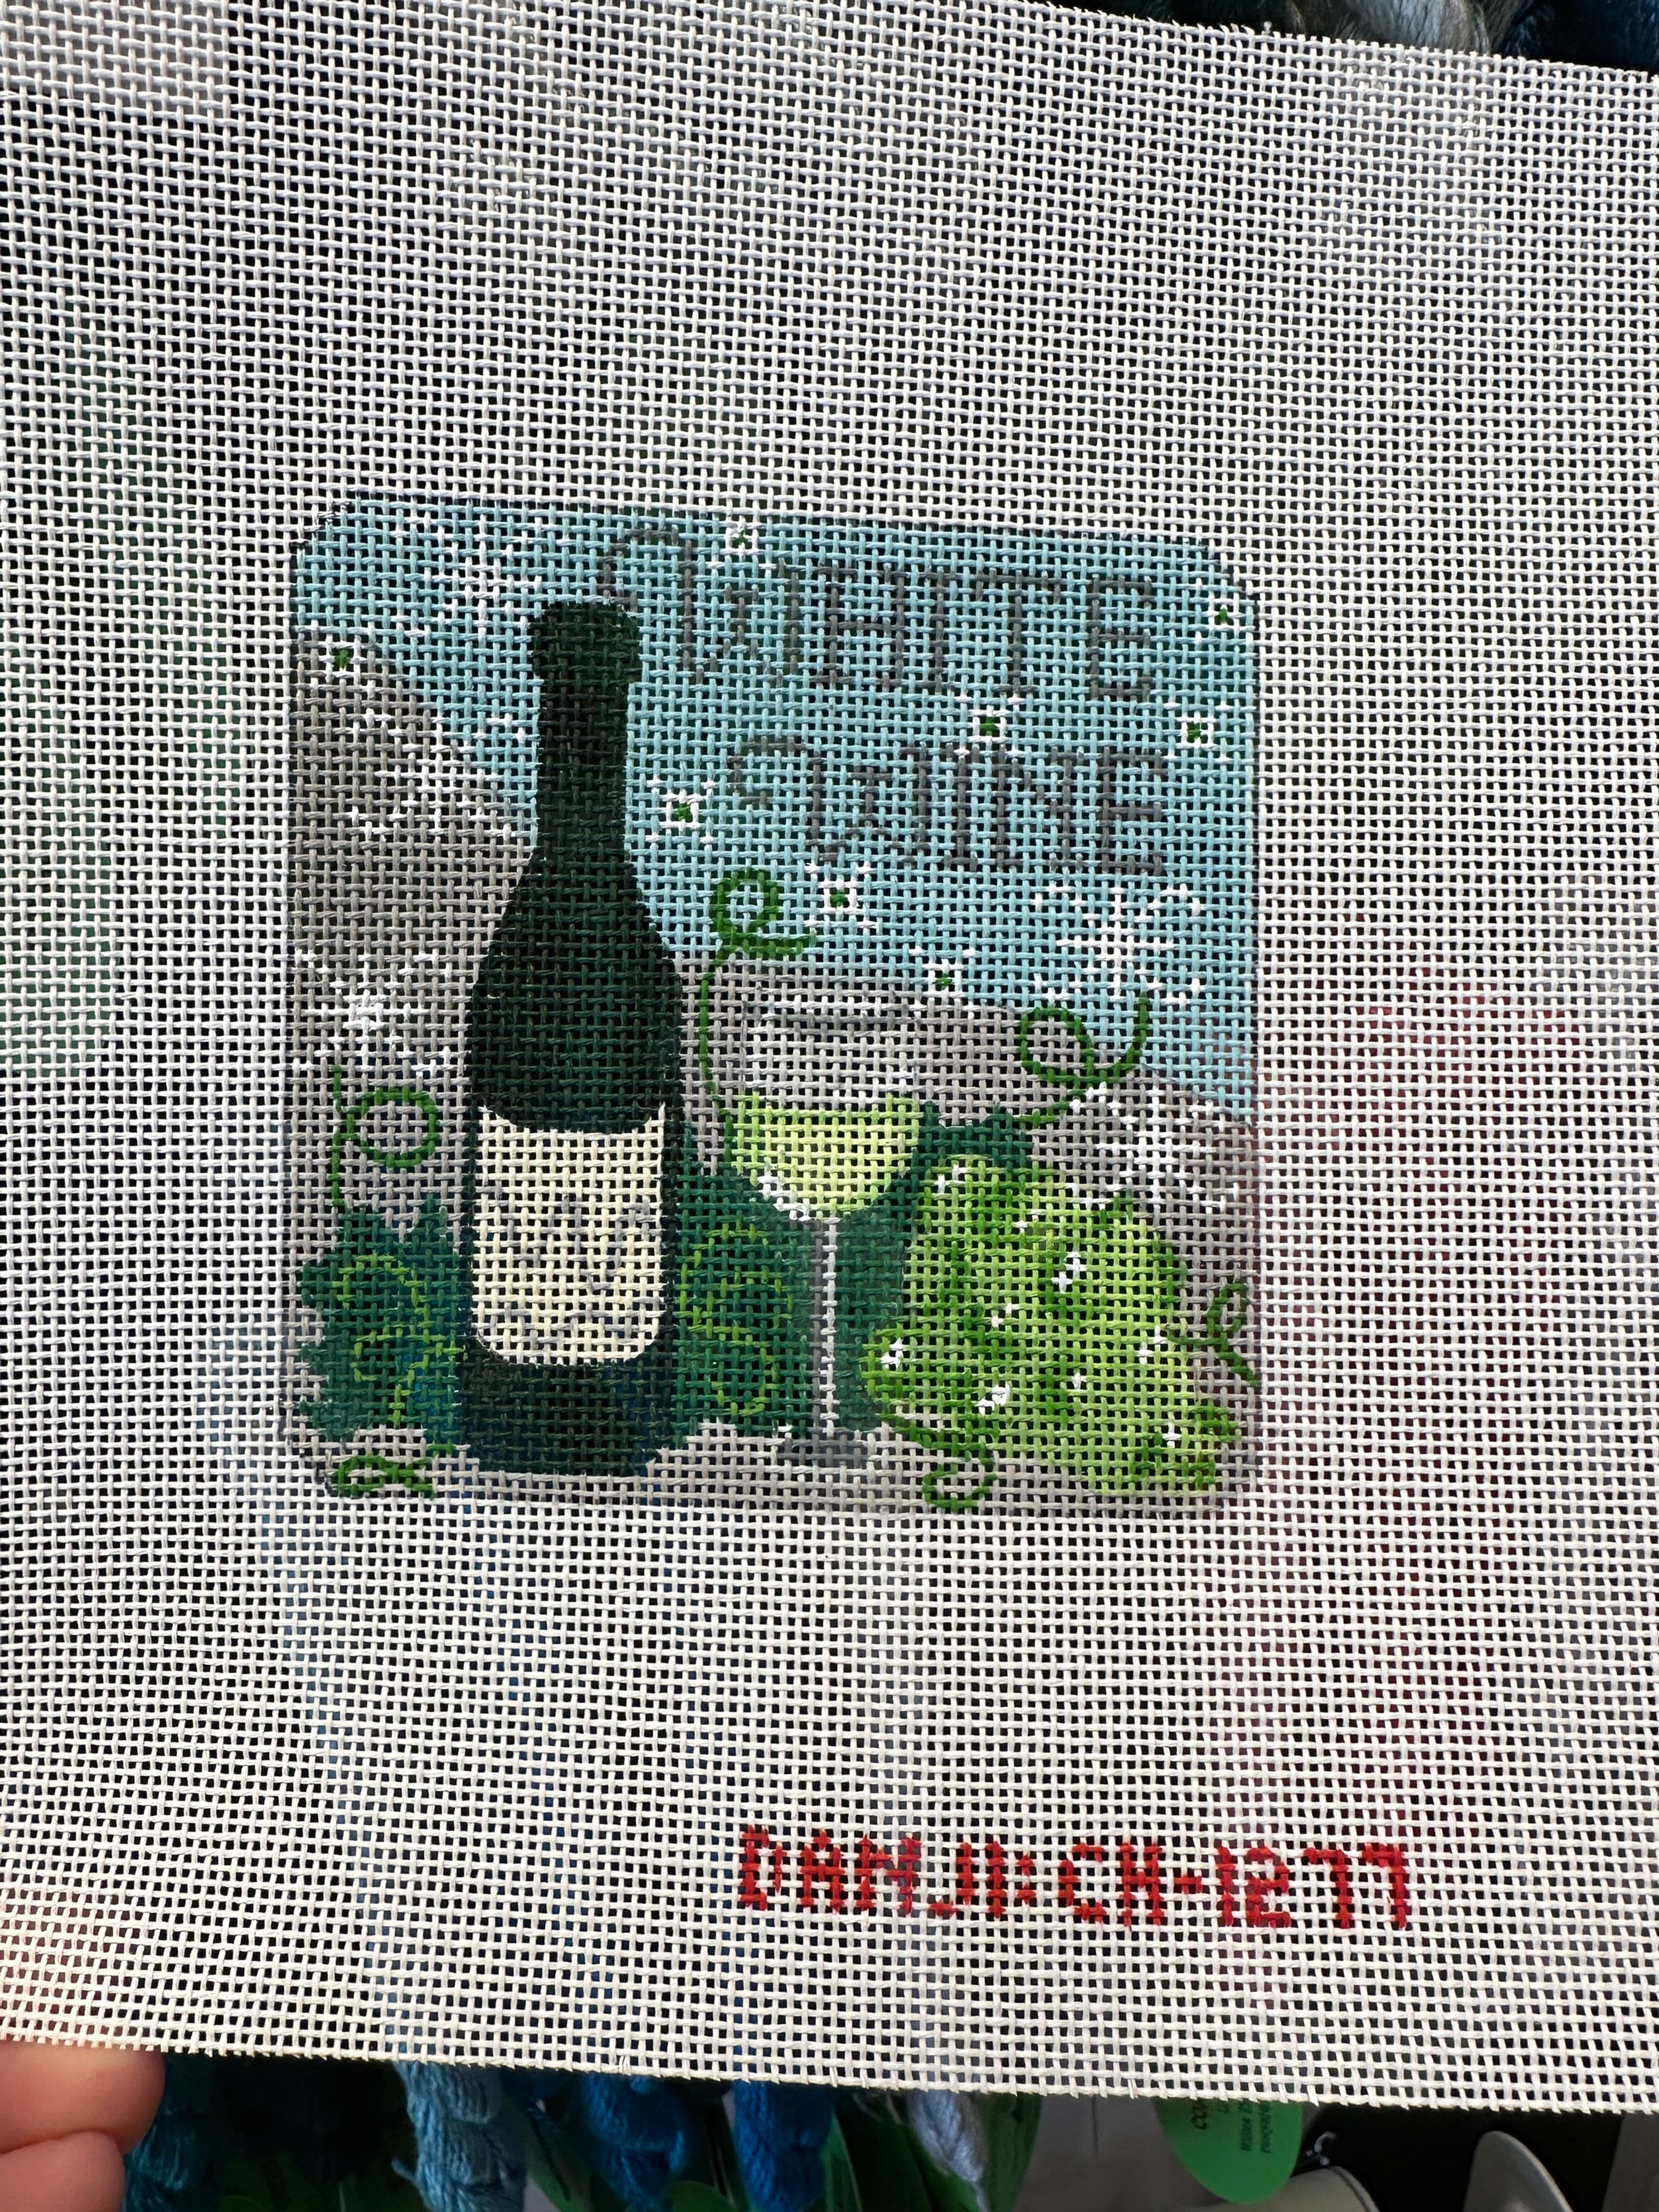 Danji CH-1277 White Wine